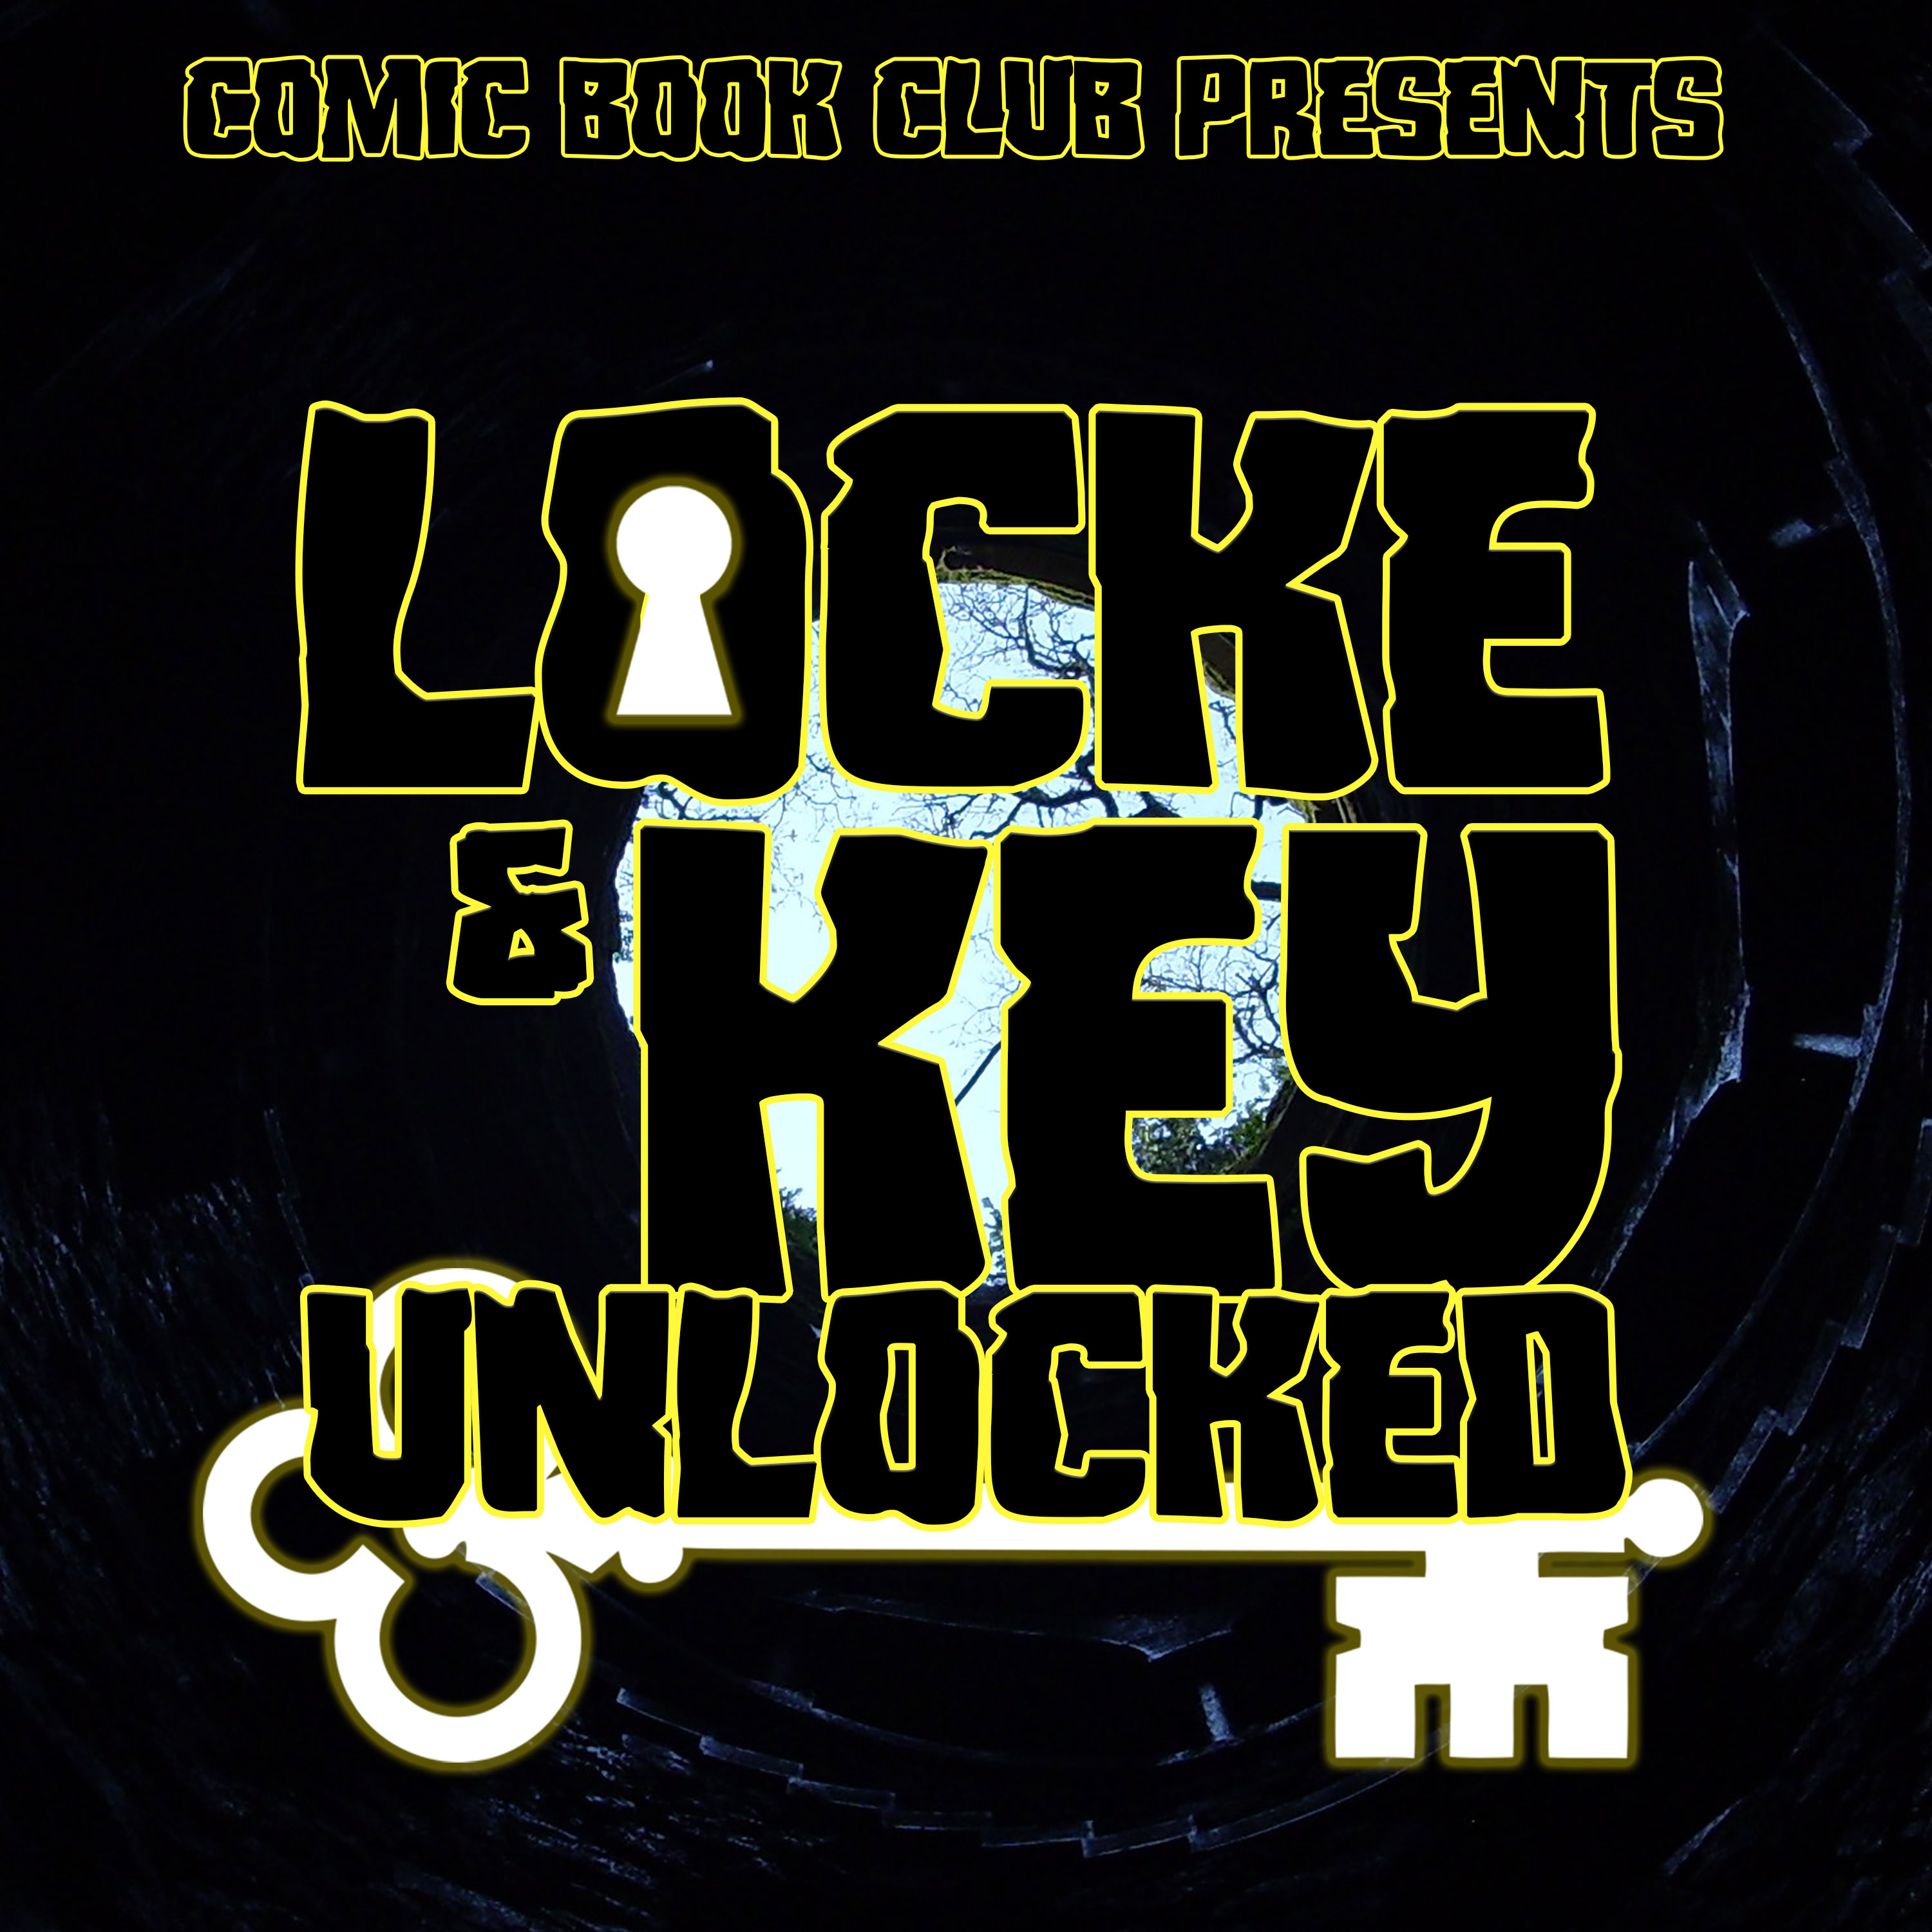 Locke & Key S2E7: "Best Laid Plans"